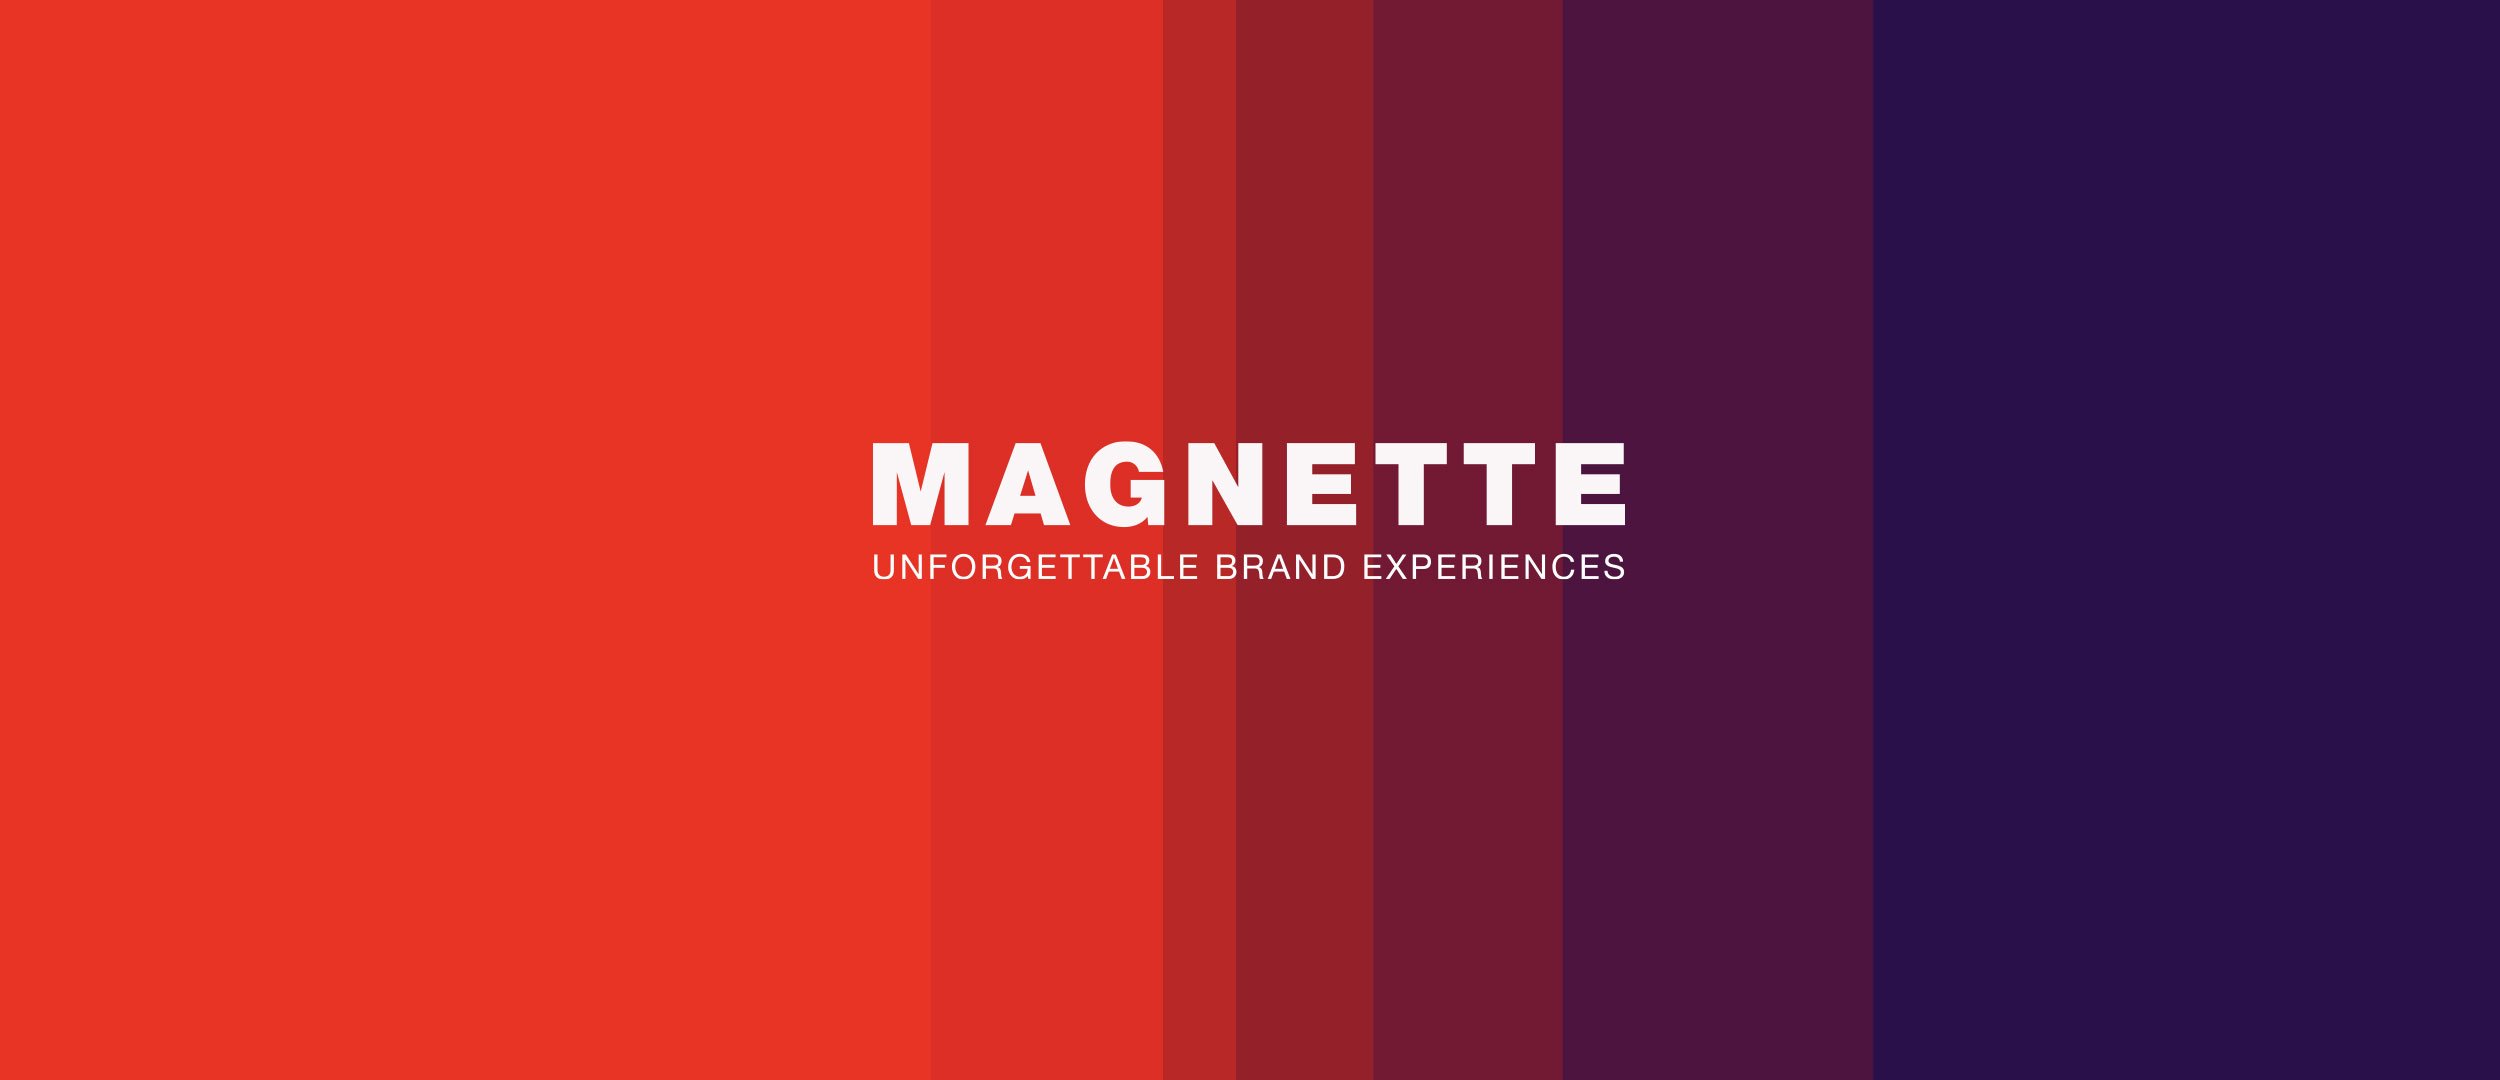 Magnette-Innovative-Brand-Experiences.jpg